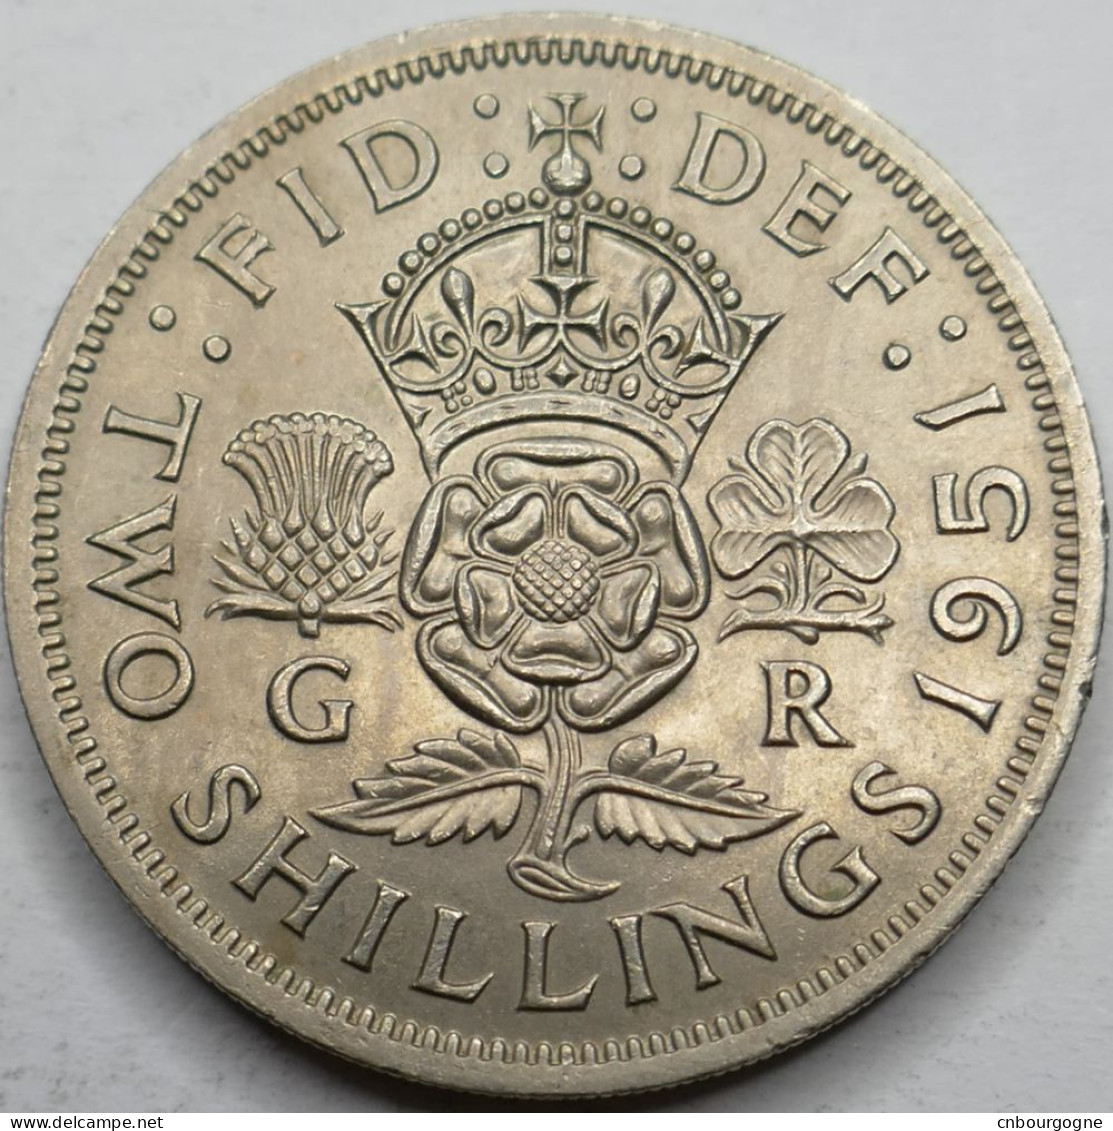 Royaume-Uni - George VI - Two Shillings 1951 - SUP/AU58 - Mon6205 - J. 1 Florin / 2 Shillings